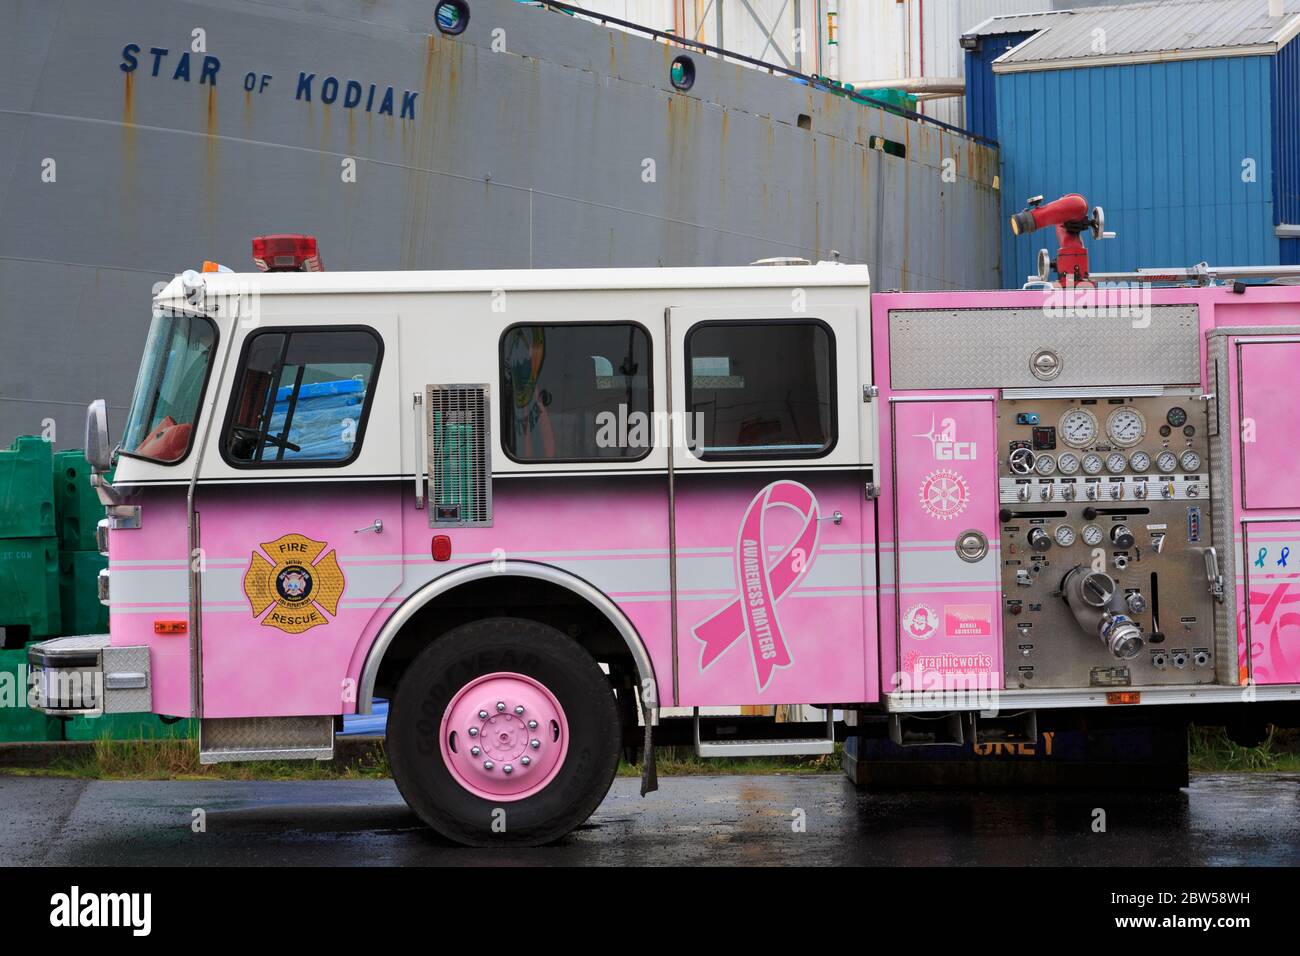 Fire Truck, Kodiak, Alaska, USA Stock Photo